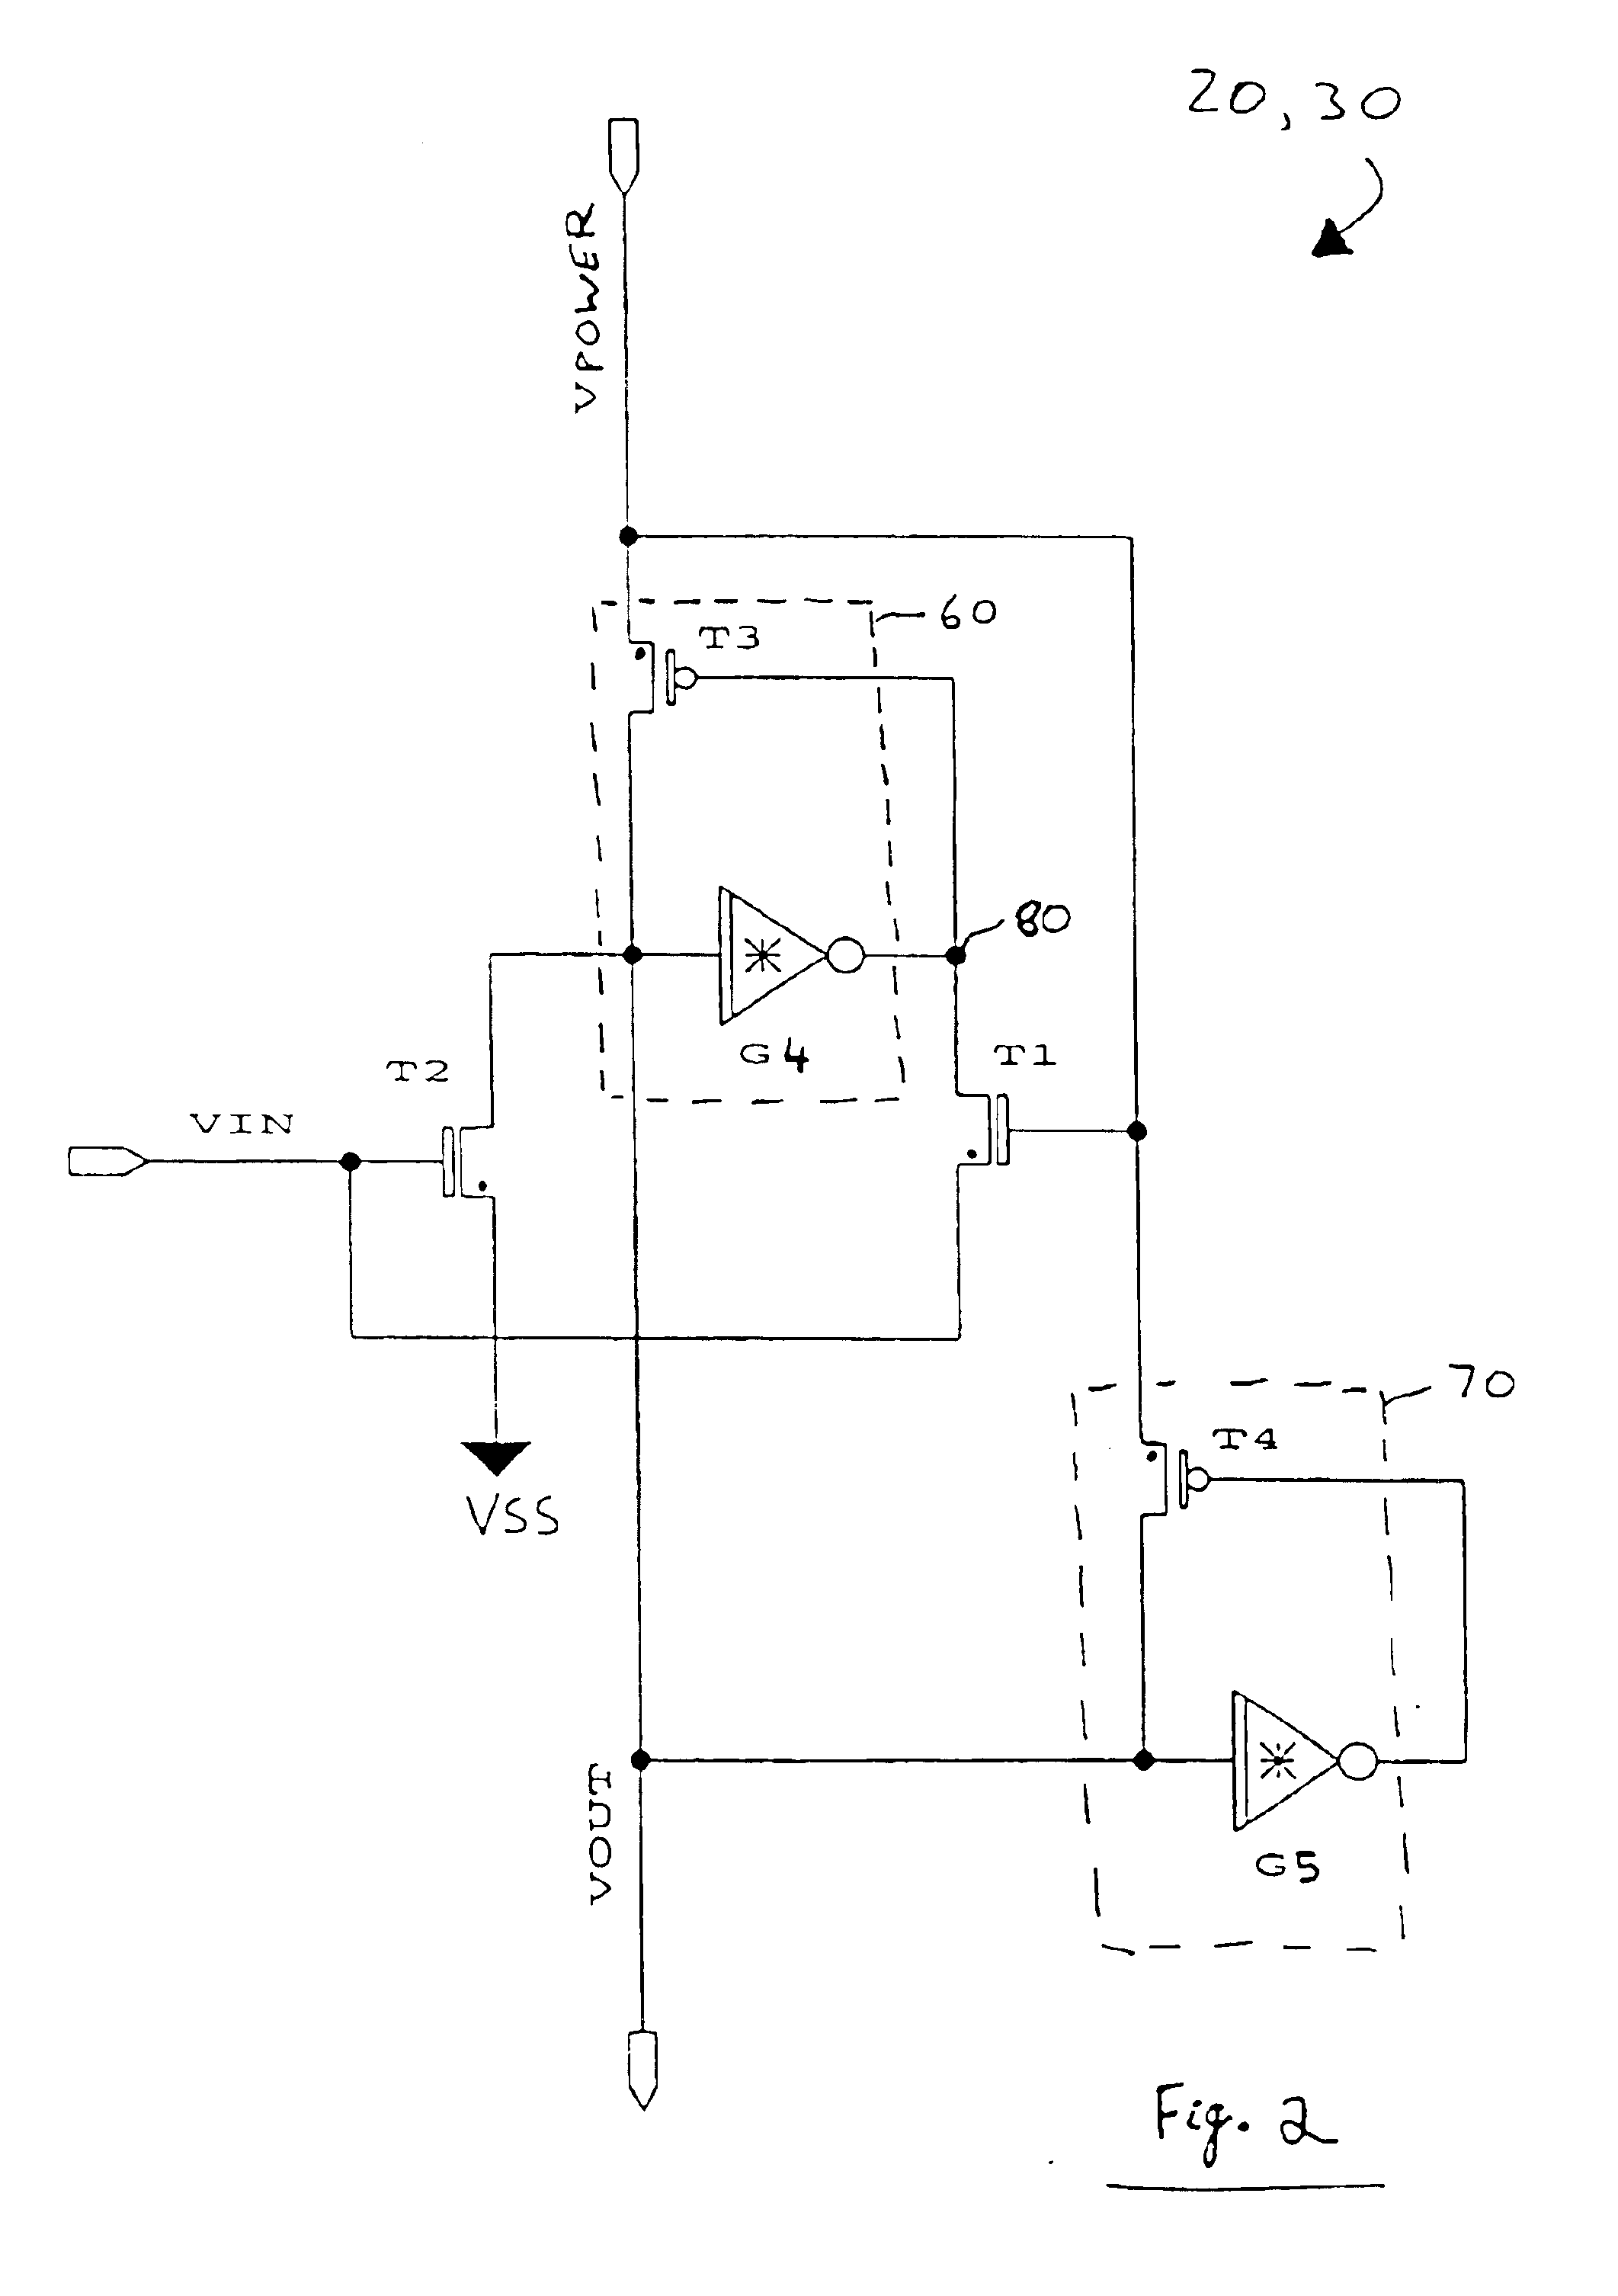 Supply voltage detection circuit